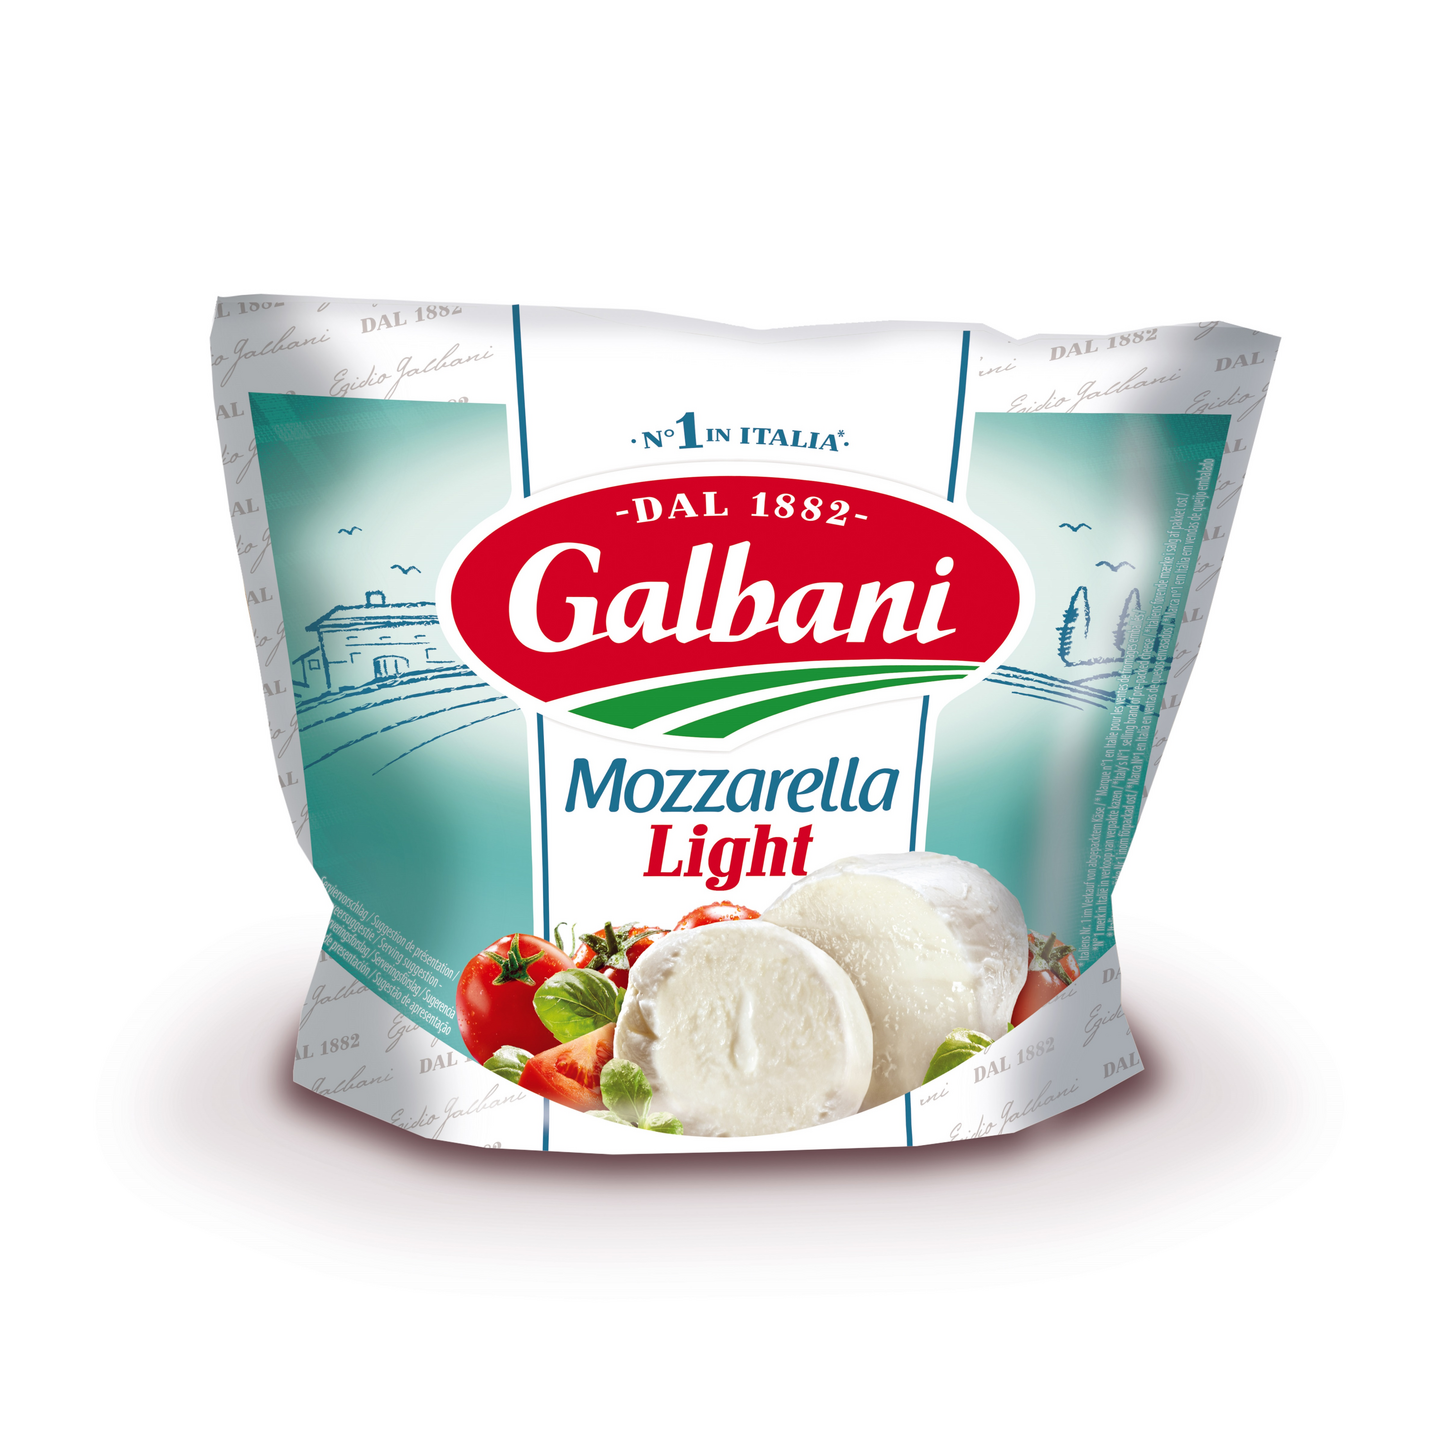 Galbani Mozzarella 125g Light